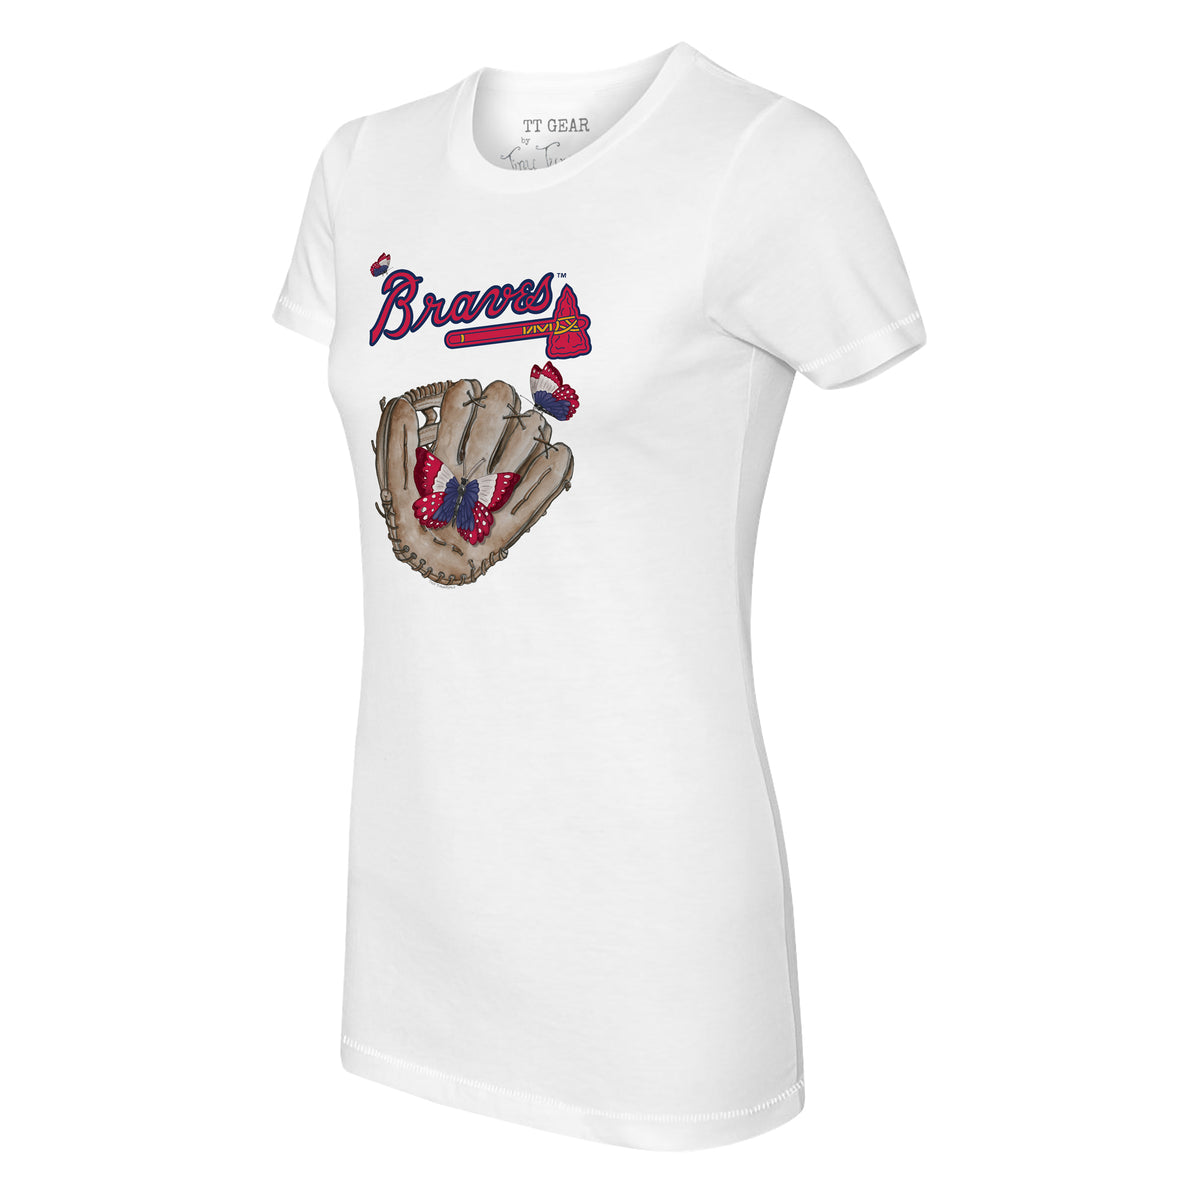 Atlanta Braves Butterfly Glove Tee Shirt